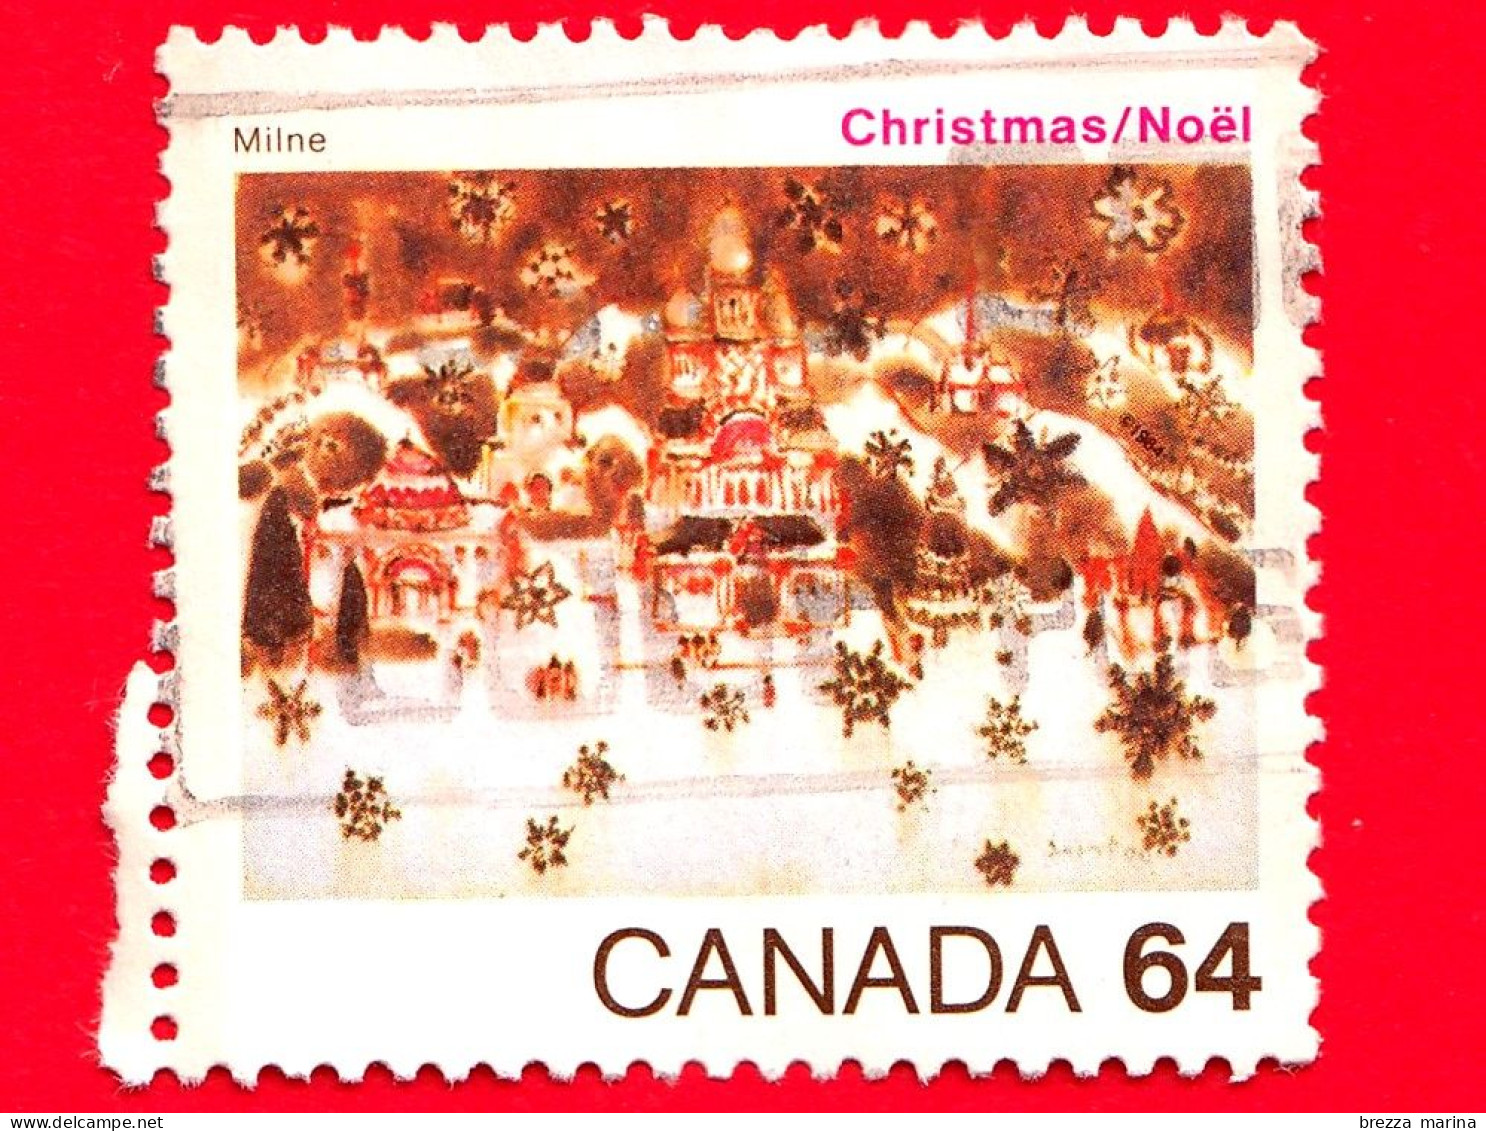 CANADA - Usato - 1984 - Natale - Christmas - Noel - Neve A Betlemme Dipinto Di David Milne - 64 - Gebruikt